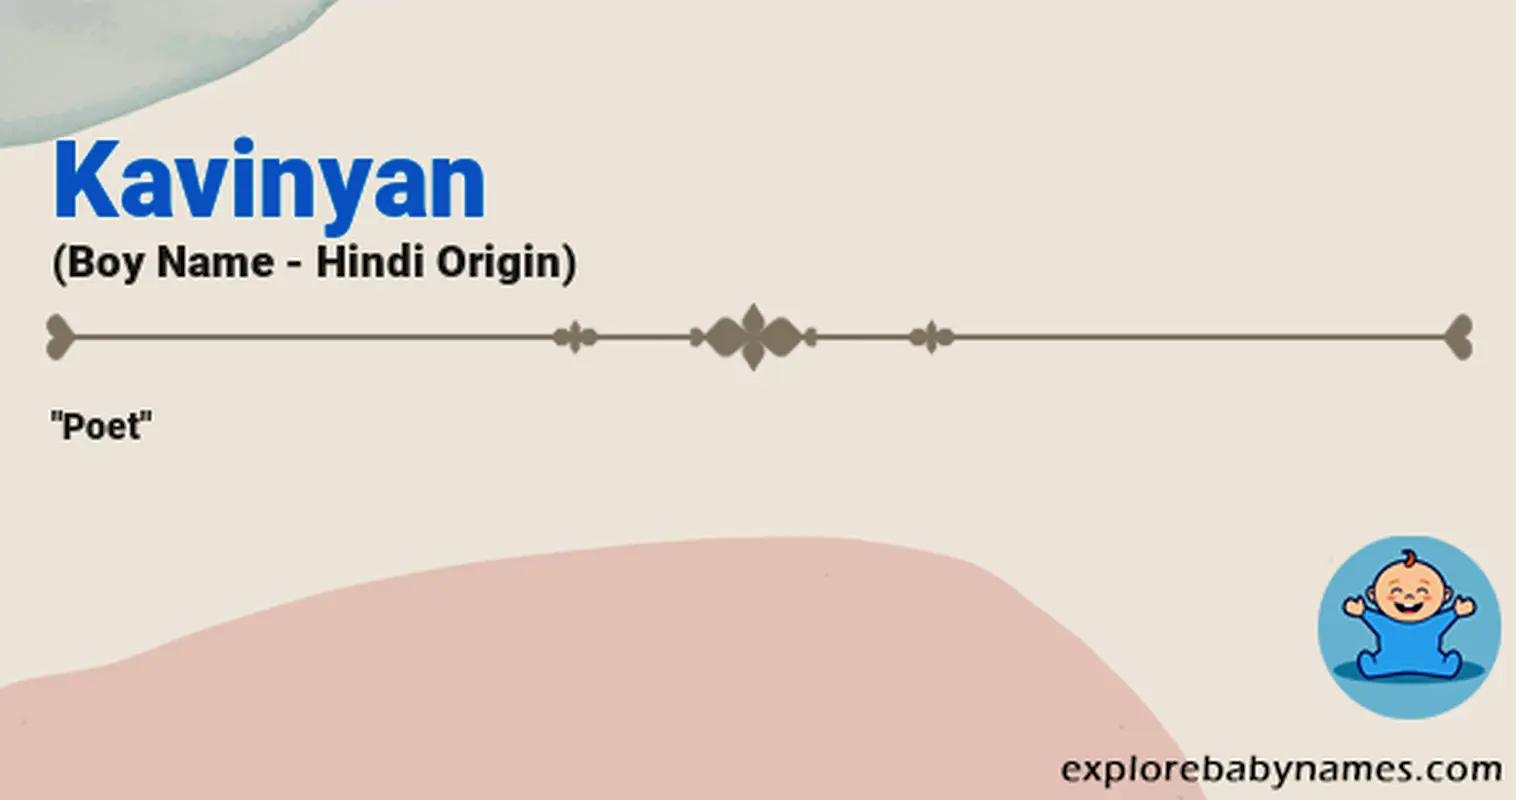 Meaning of Kavinyan